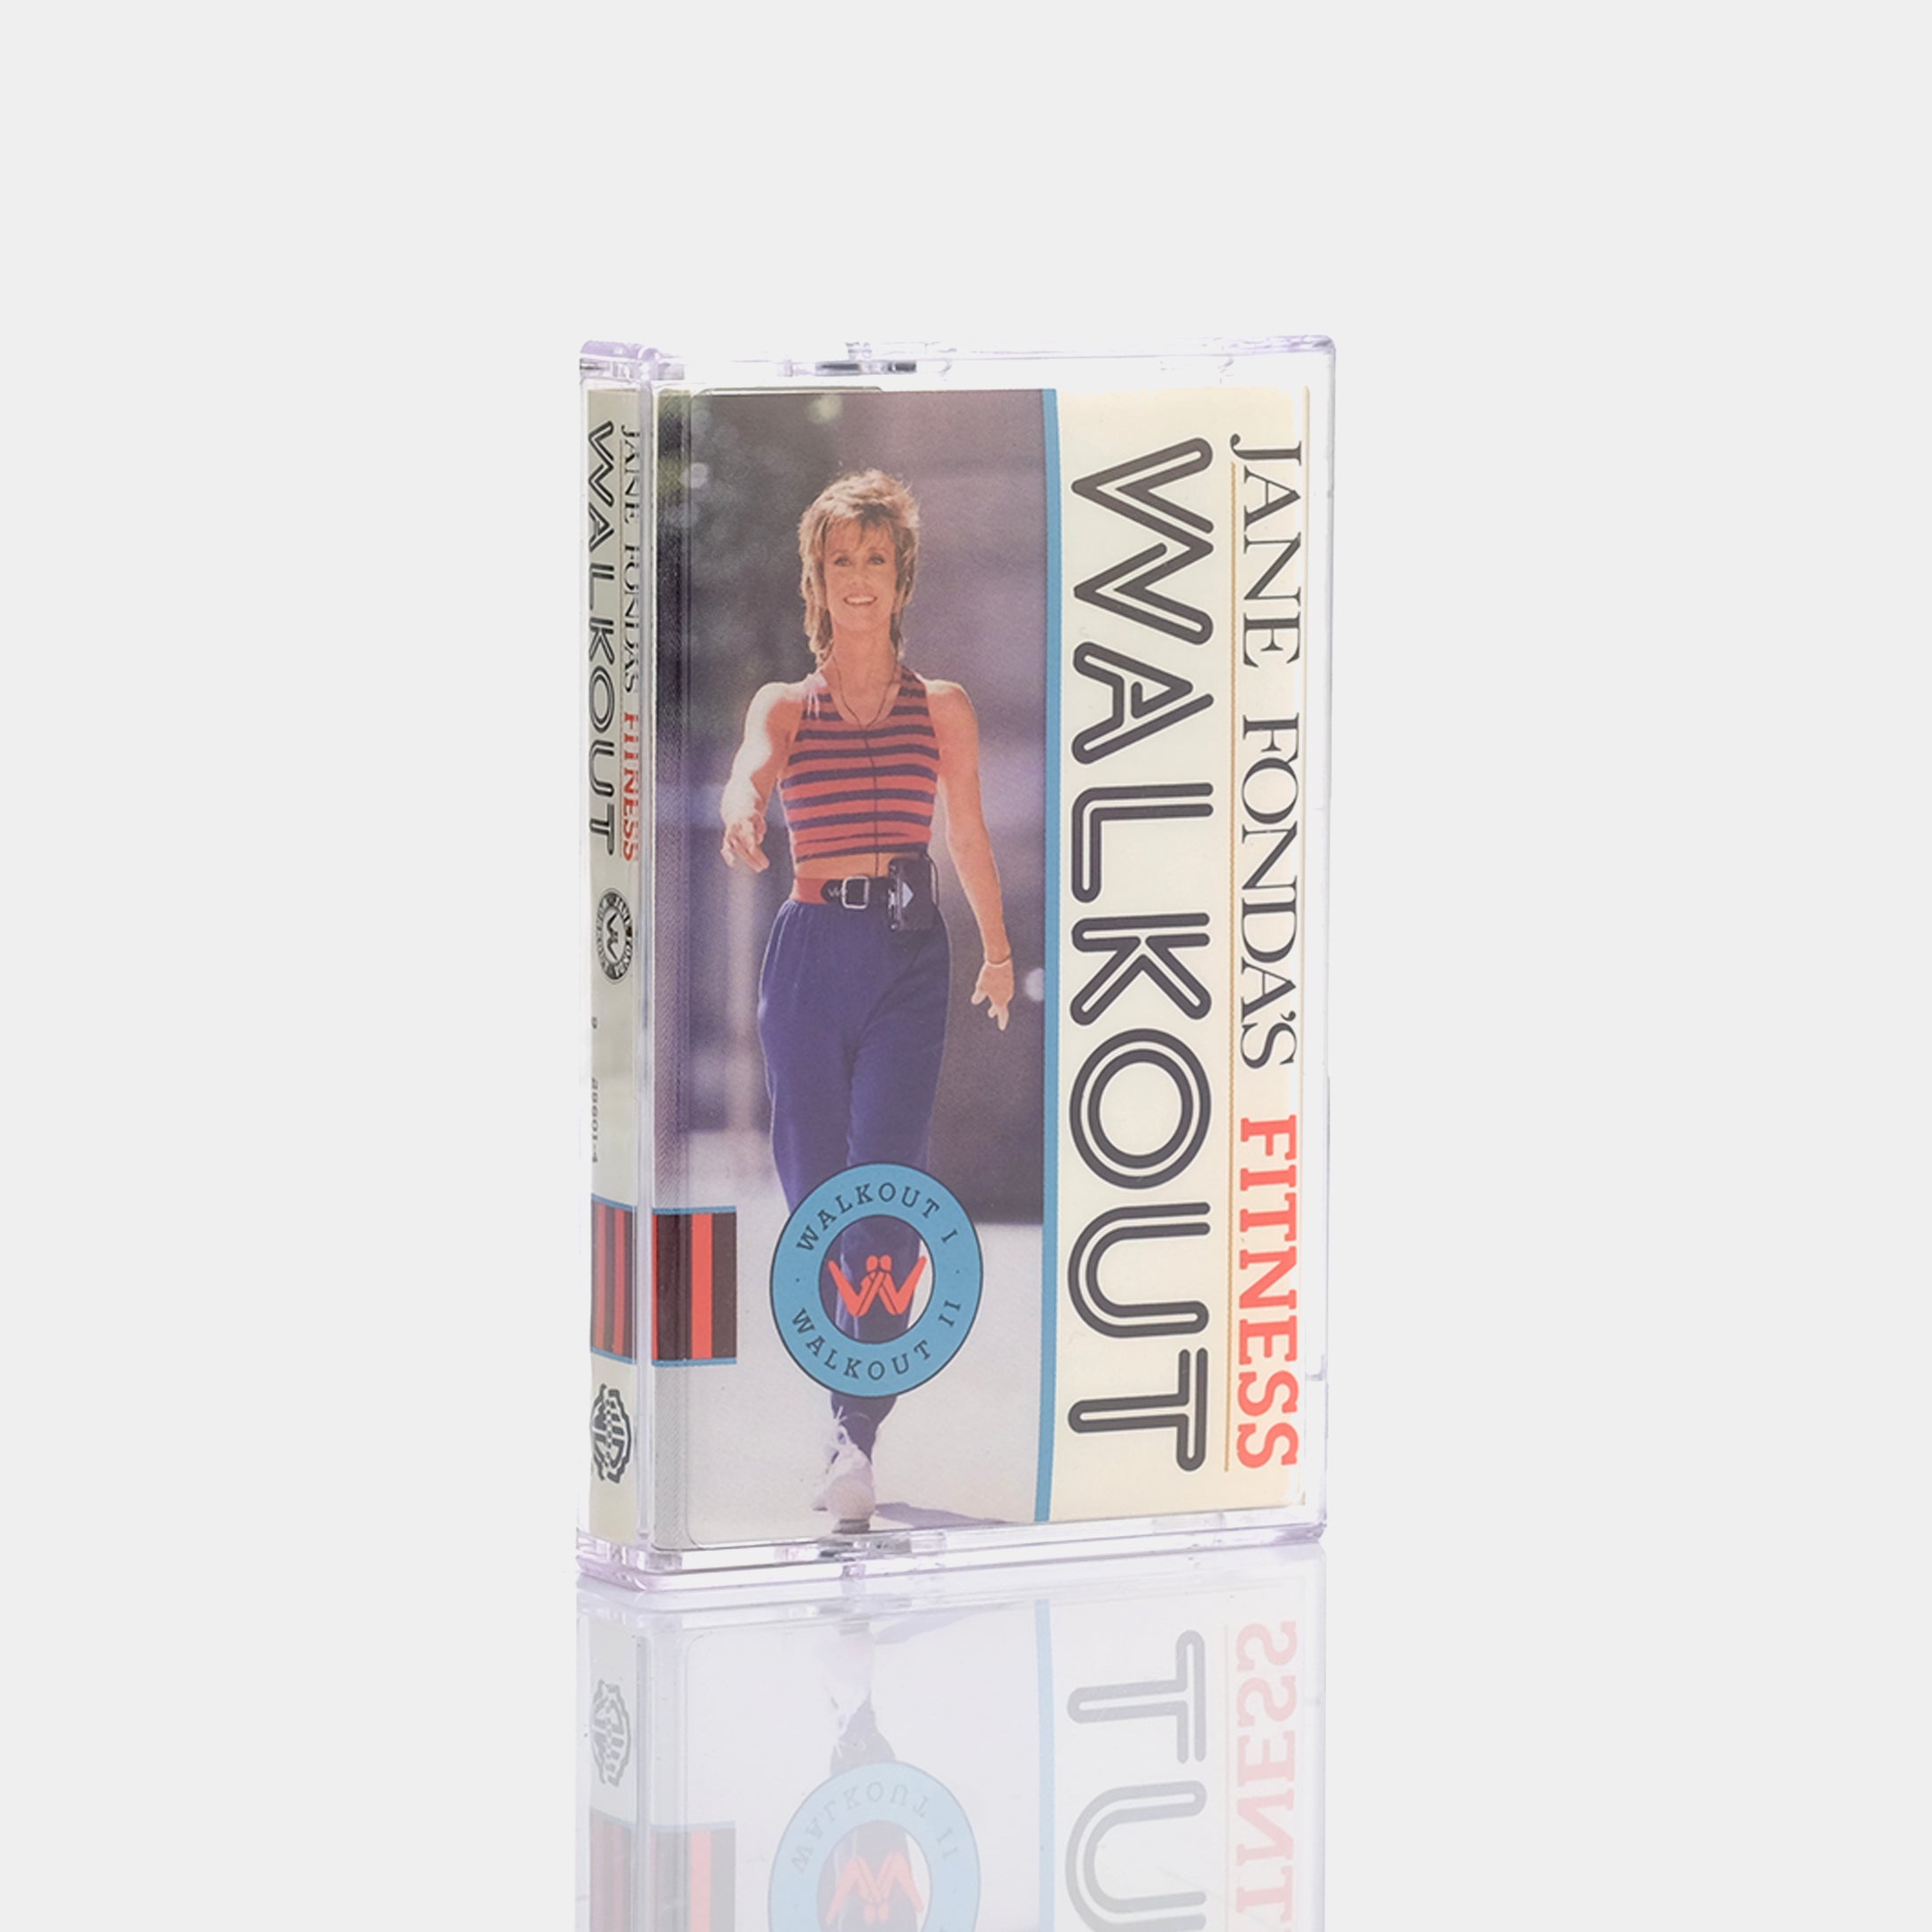 Jane Fonda - Jane Fonda's Fitness Walkout I & II Cassette Tape